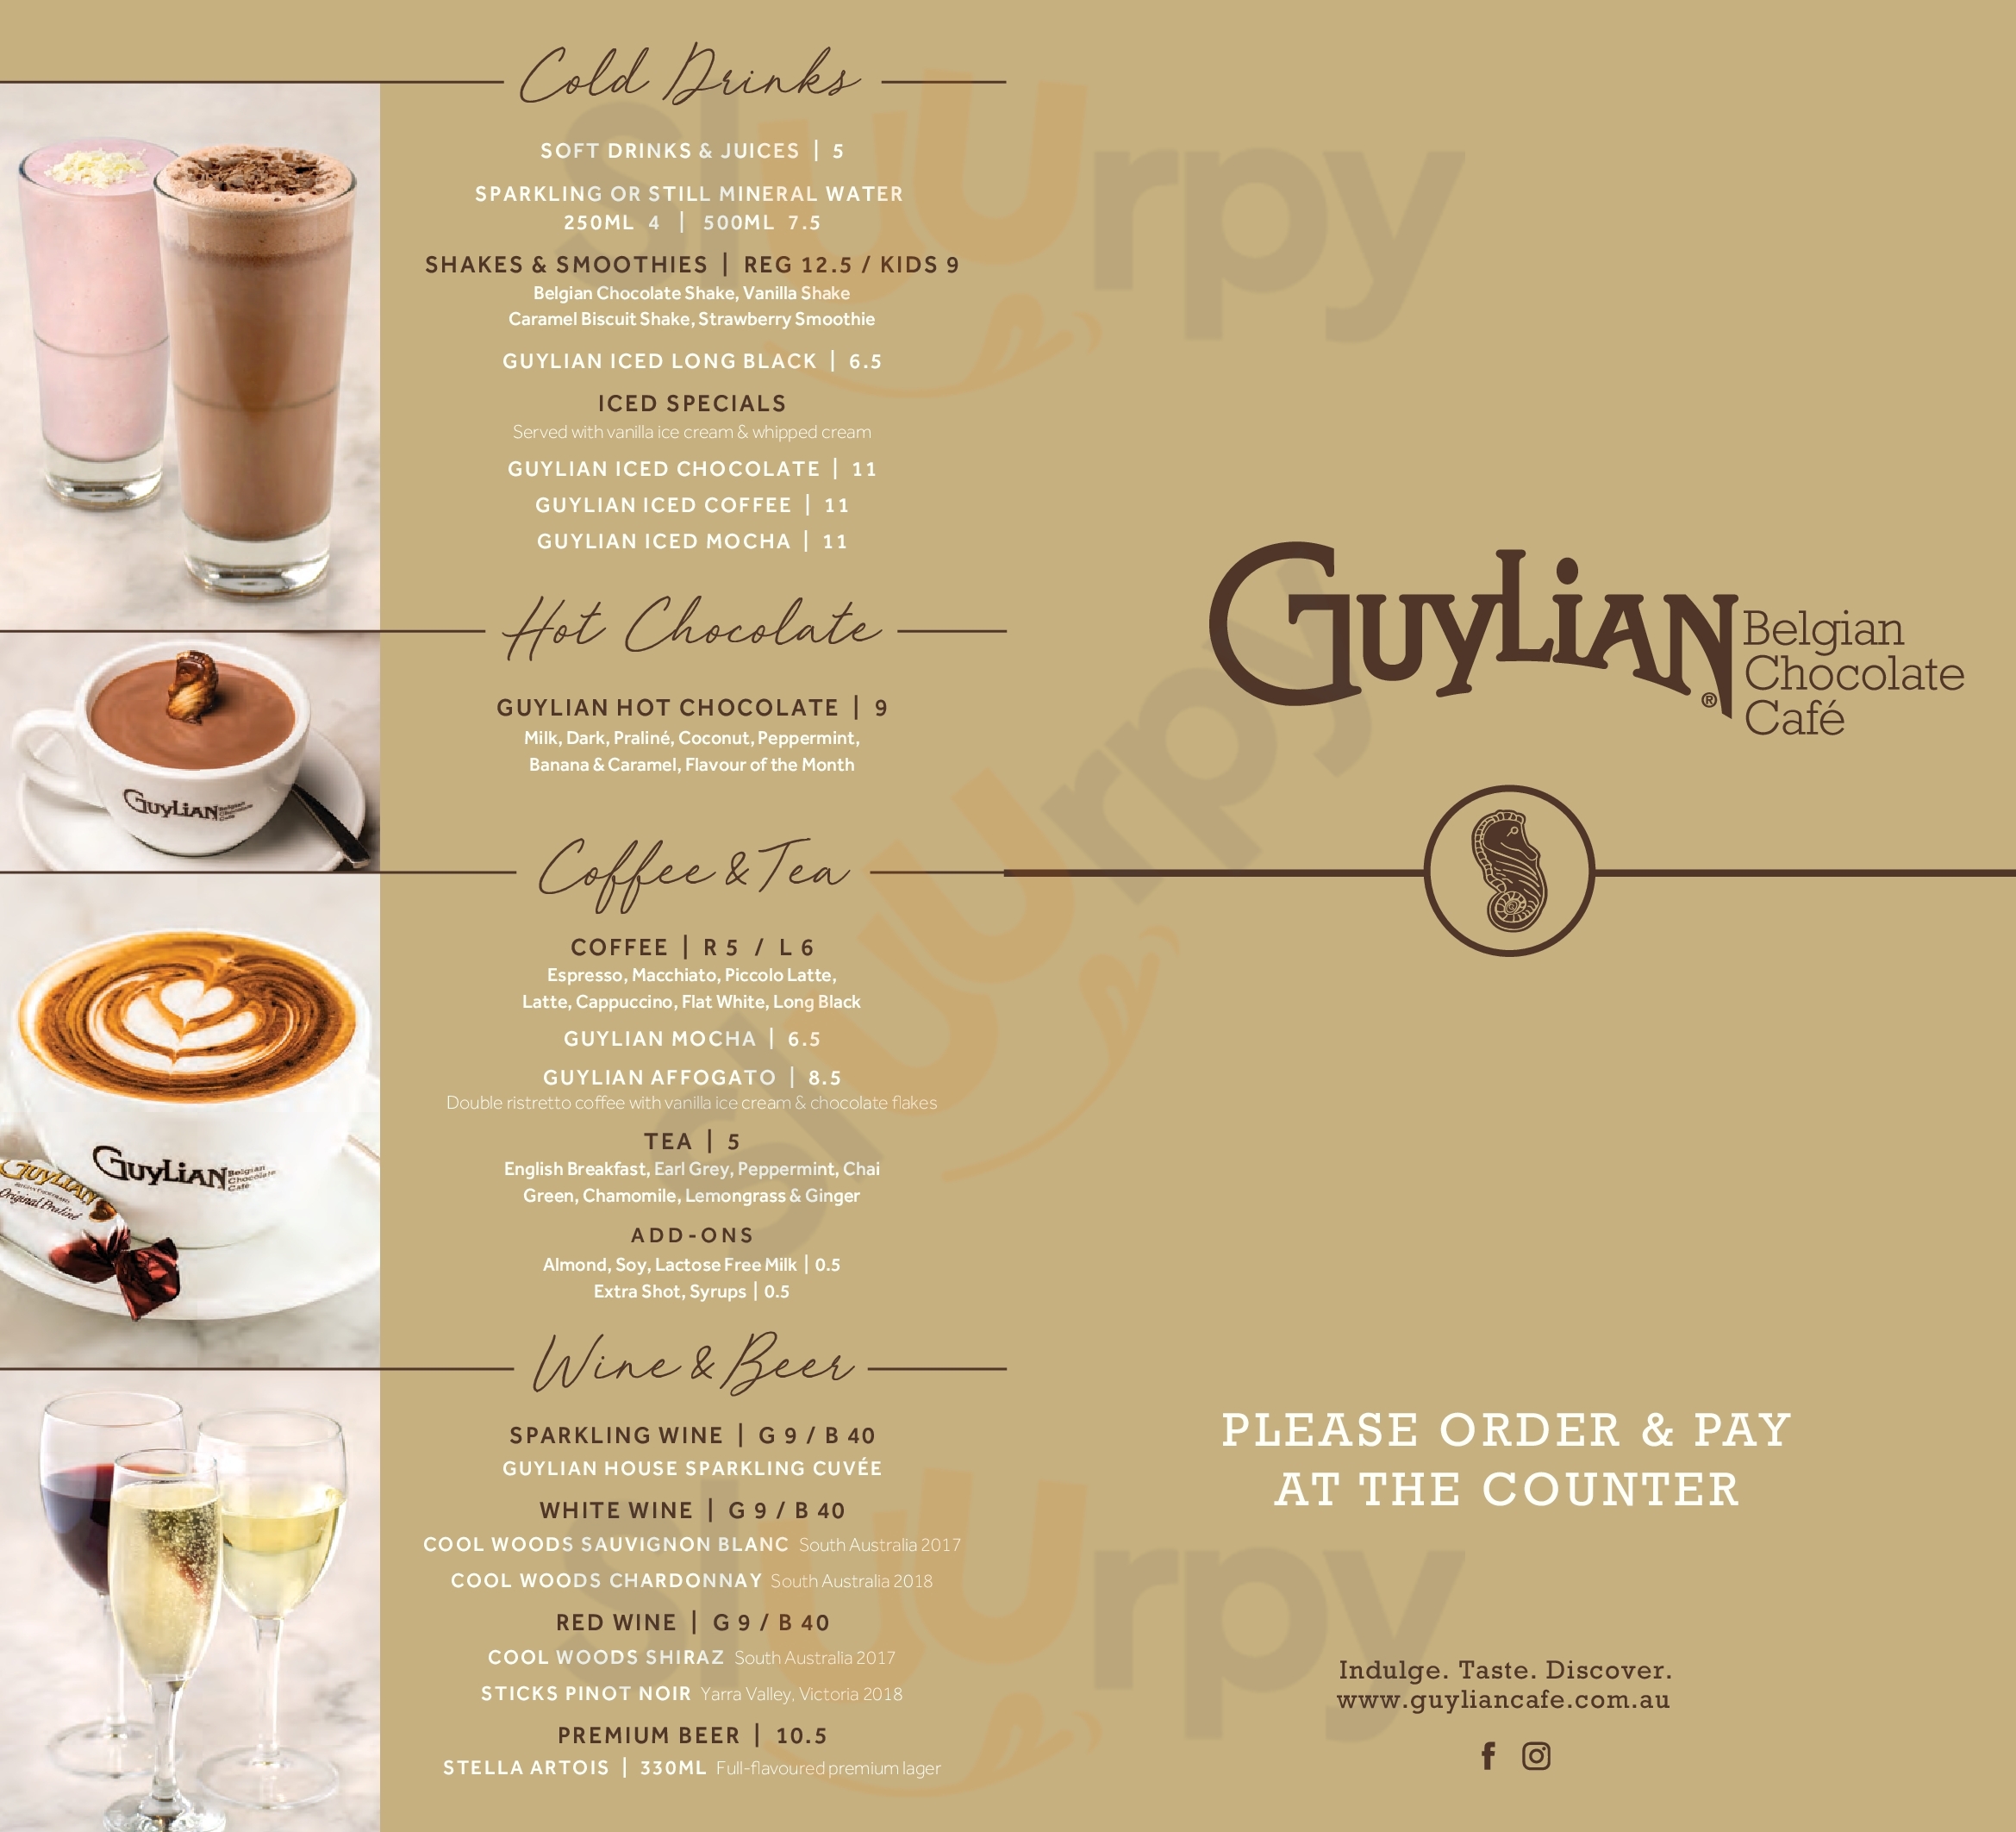 Guylian Belgian Chocolate Cafe Sydney Menu - 1